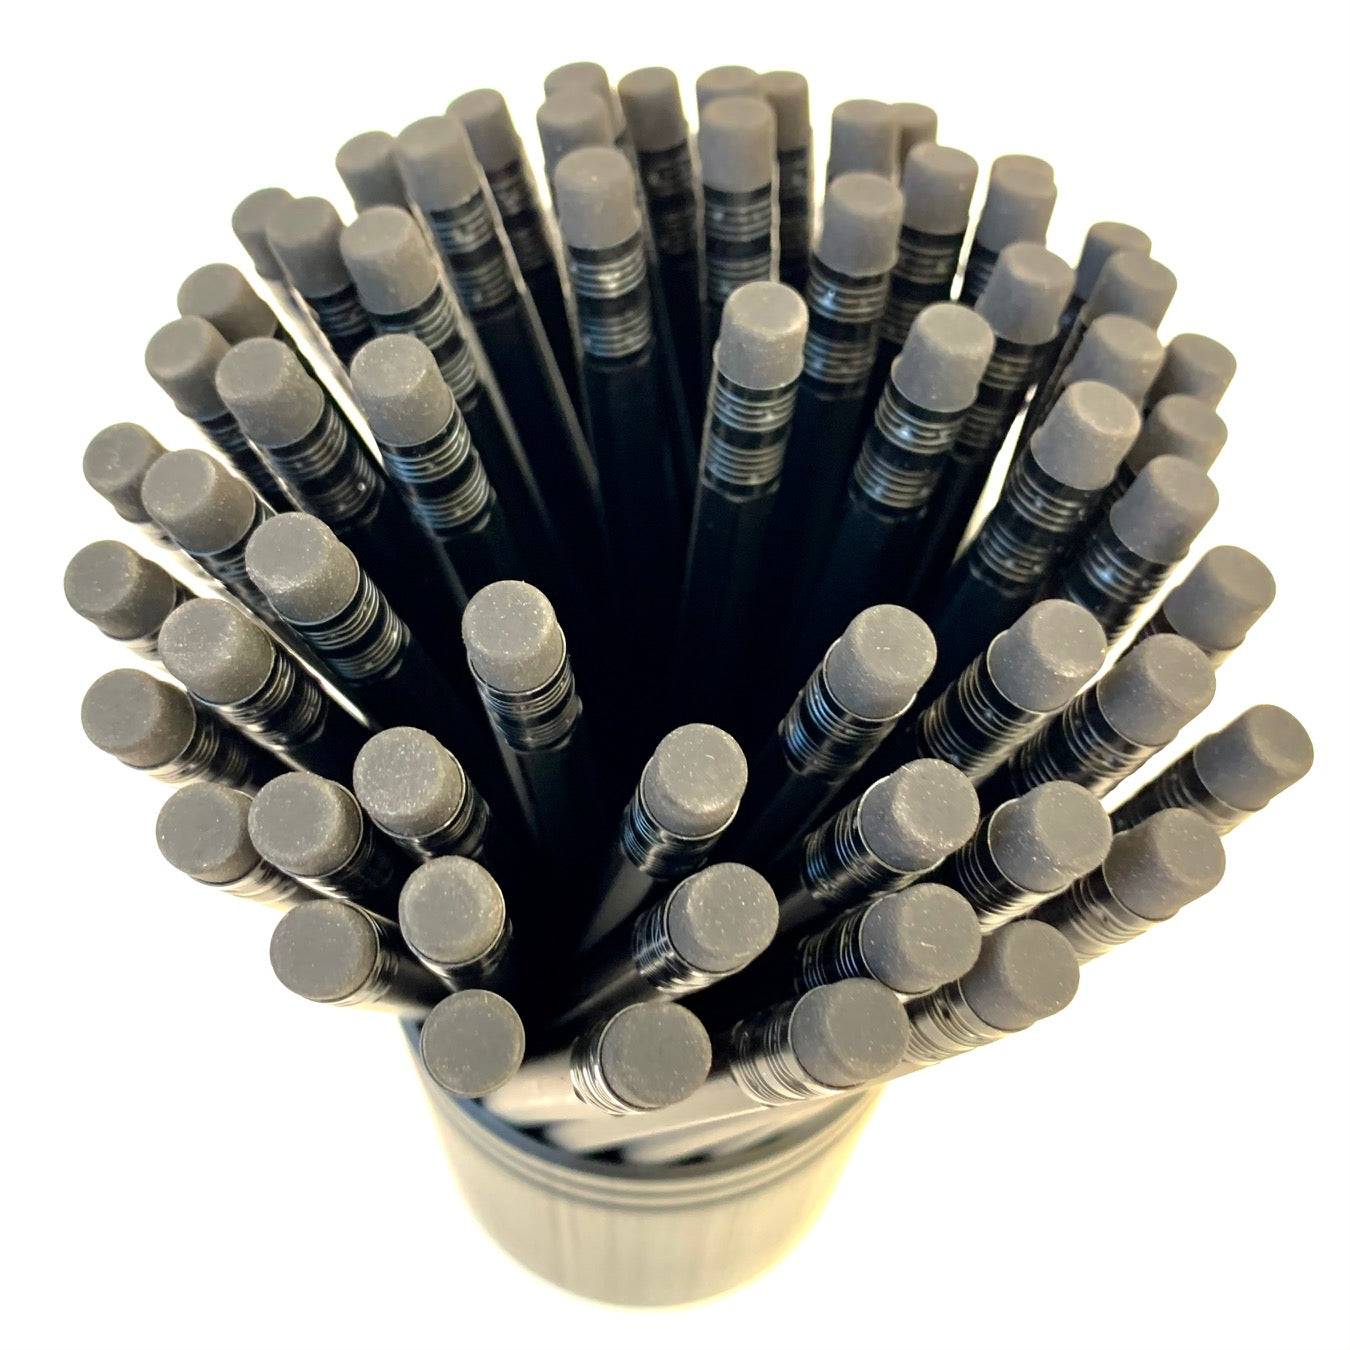 Black pencils with eraser – Museum Shop Italy